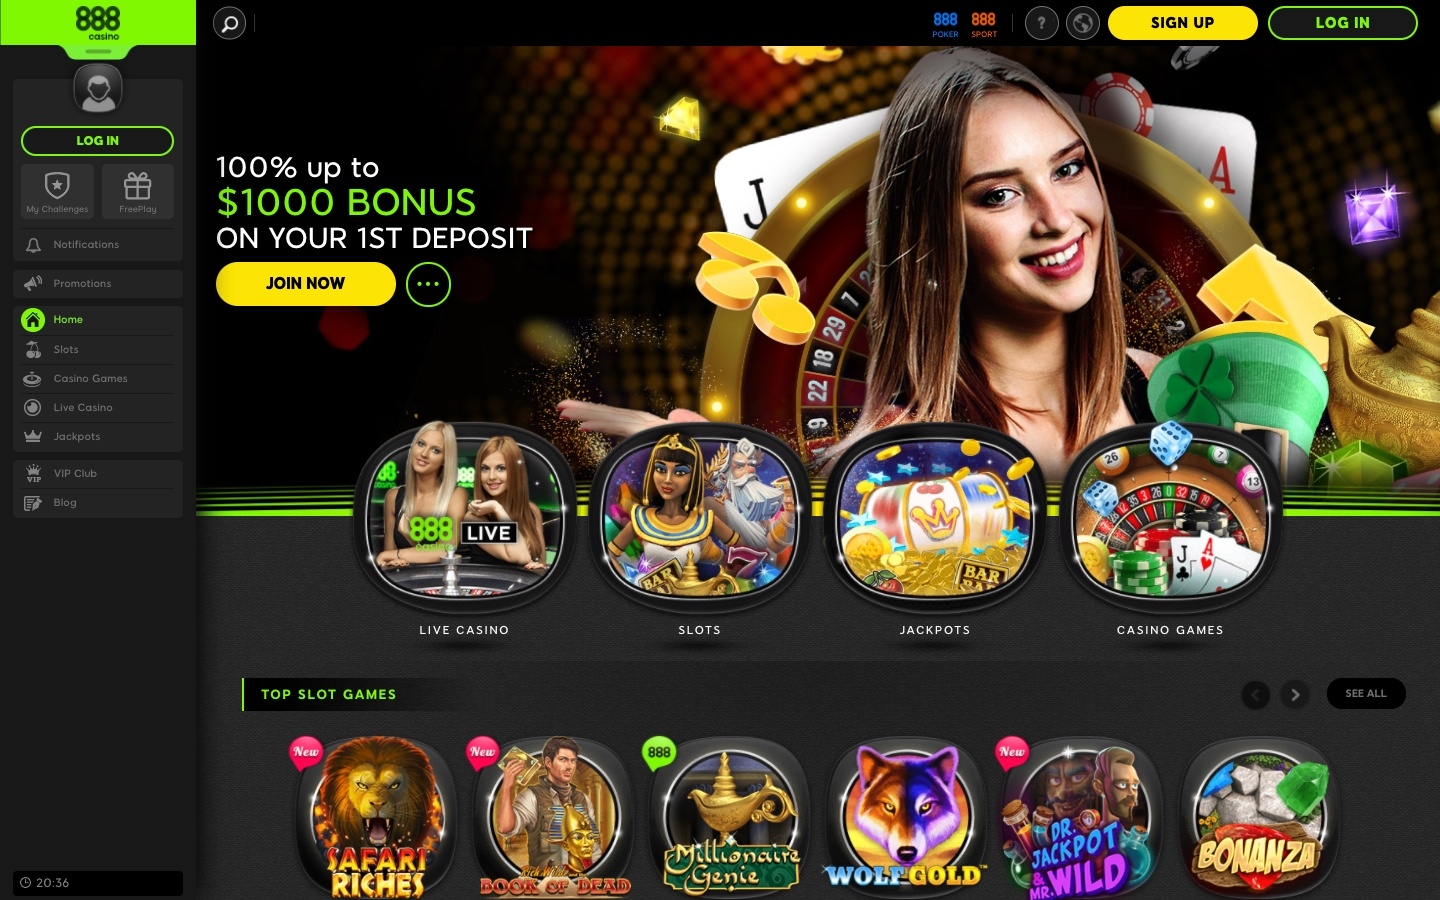 888 mobile casino review